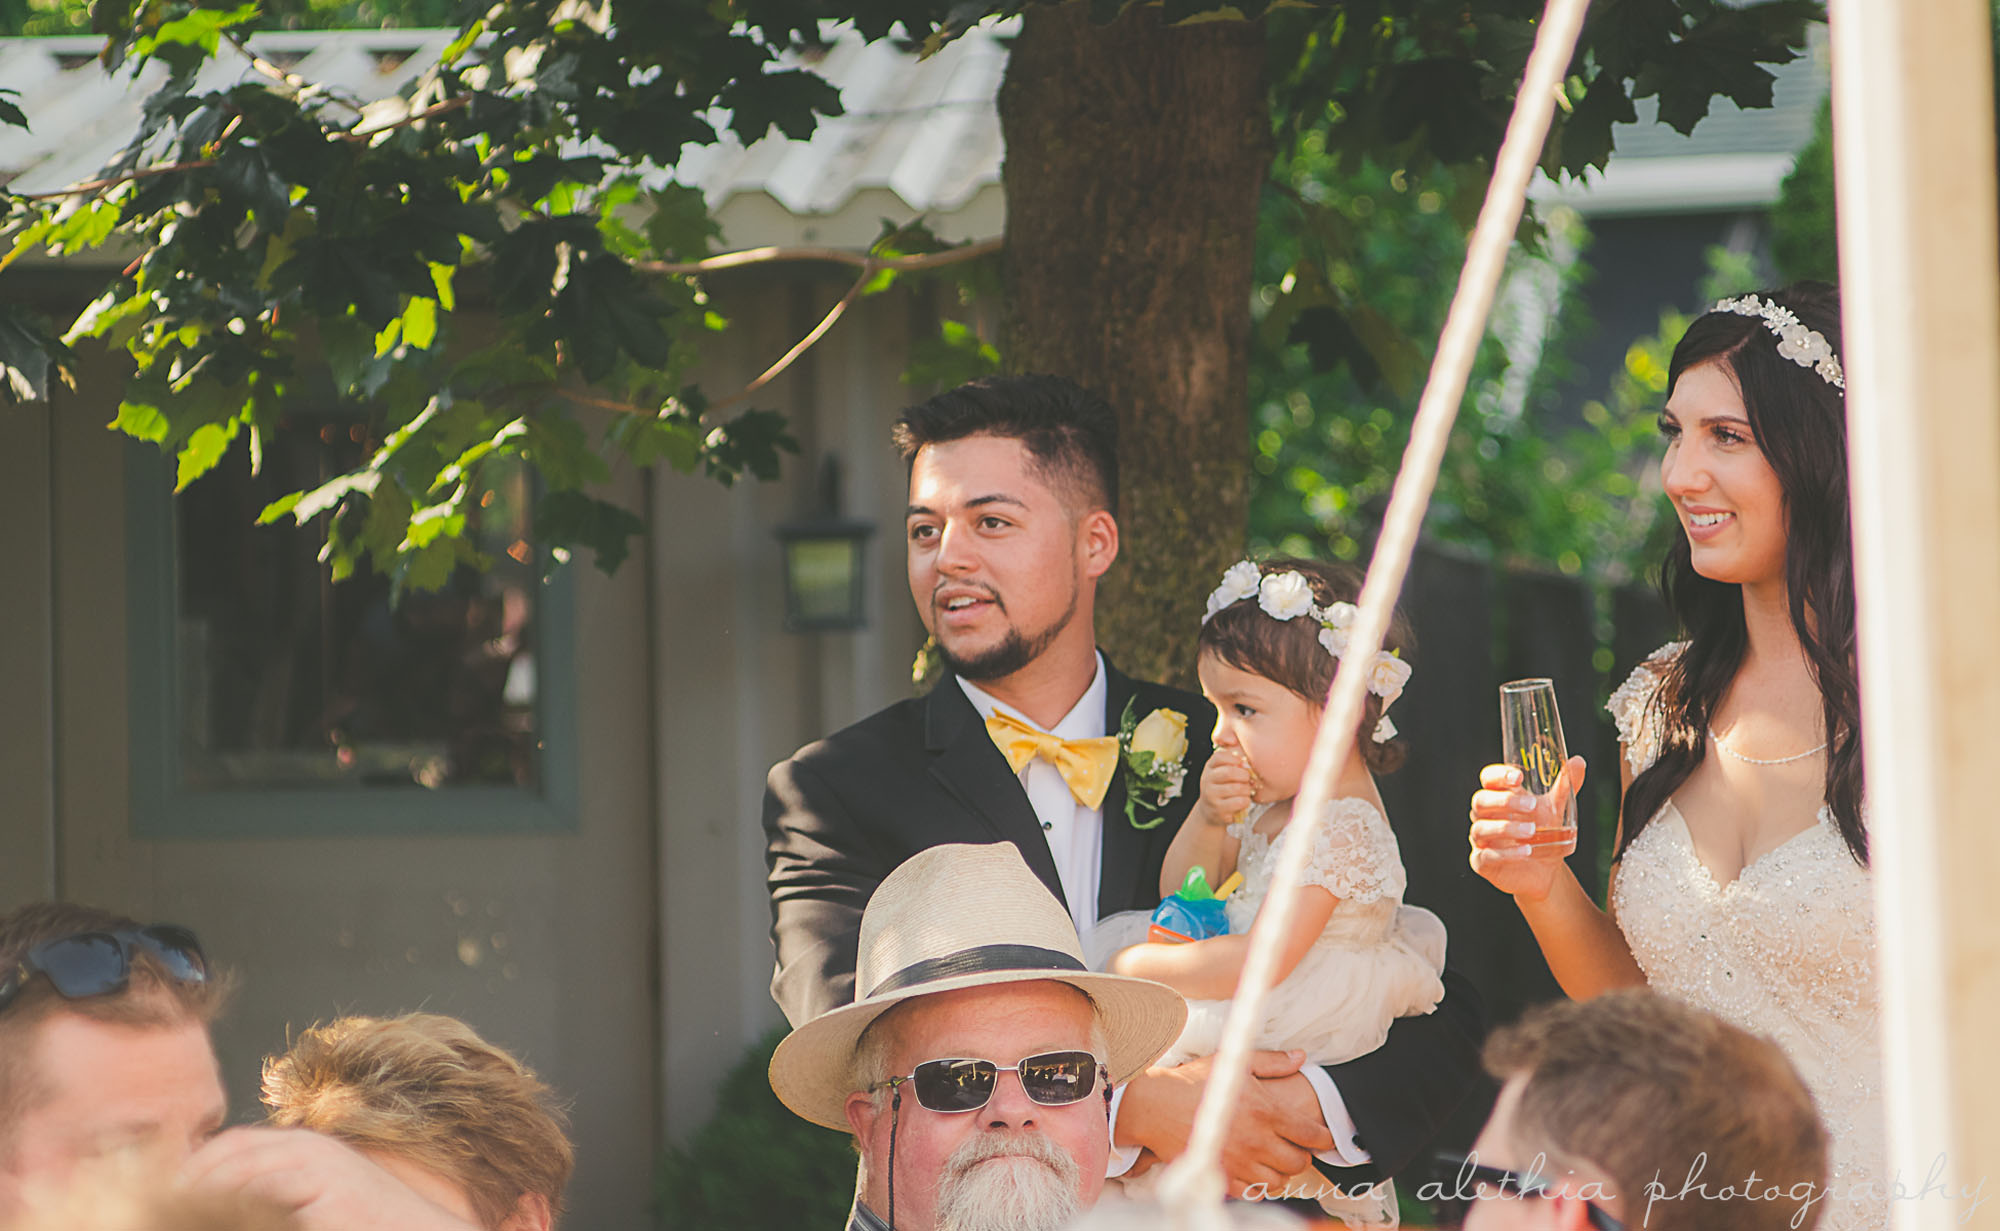 Oshkosh WI backyard wedding photos